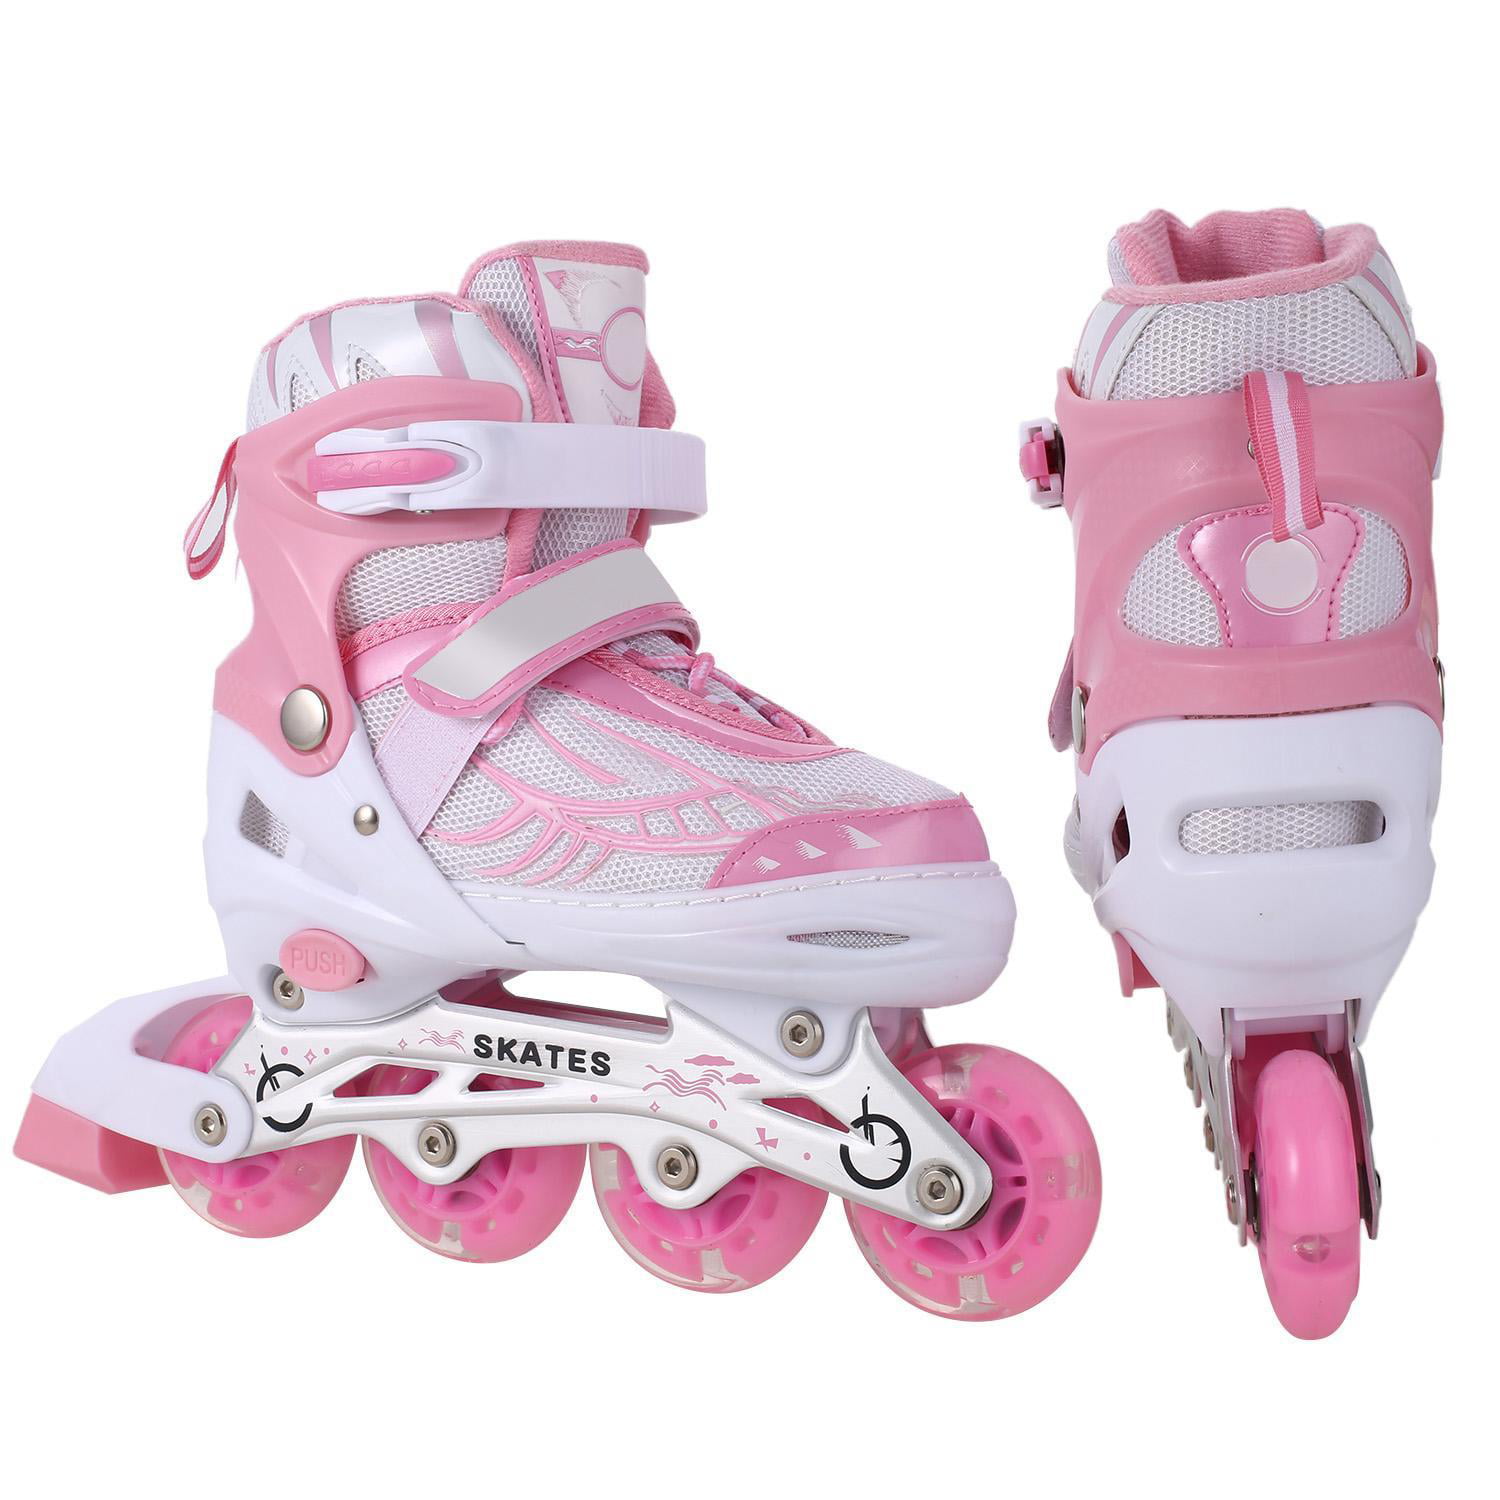 Roller Skates for Girls and Boys Kids Adjustable Roller Skates with Light up Wheels and Shining Upper Design for Beginner Birthday 